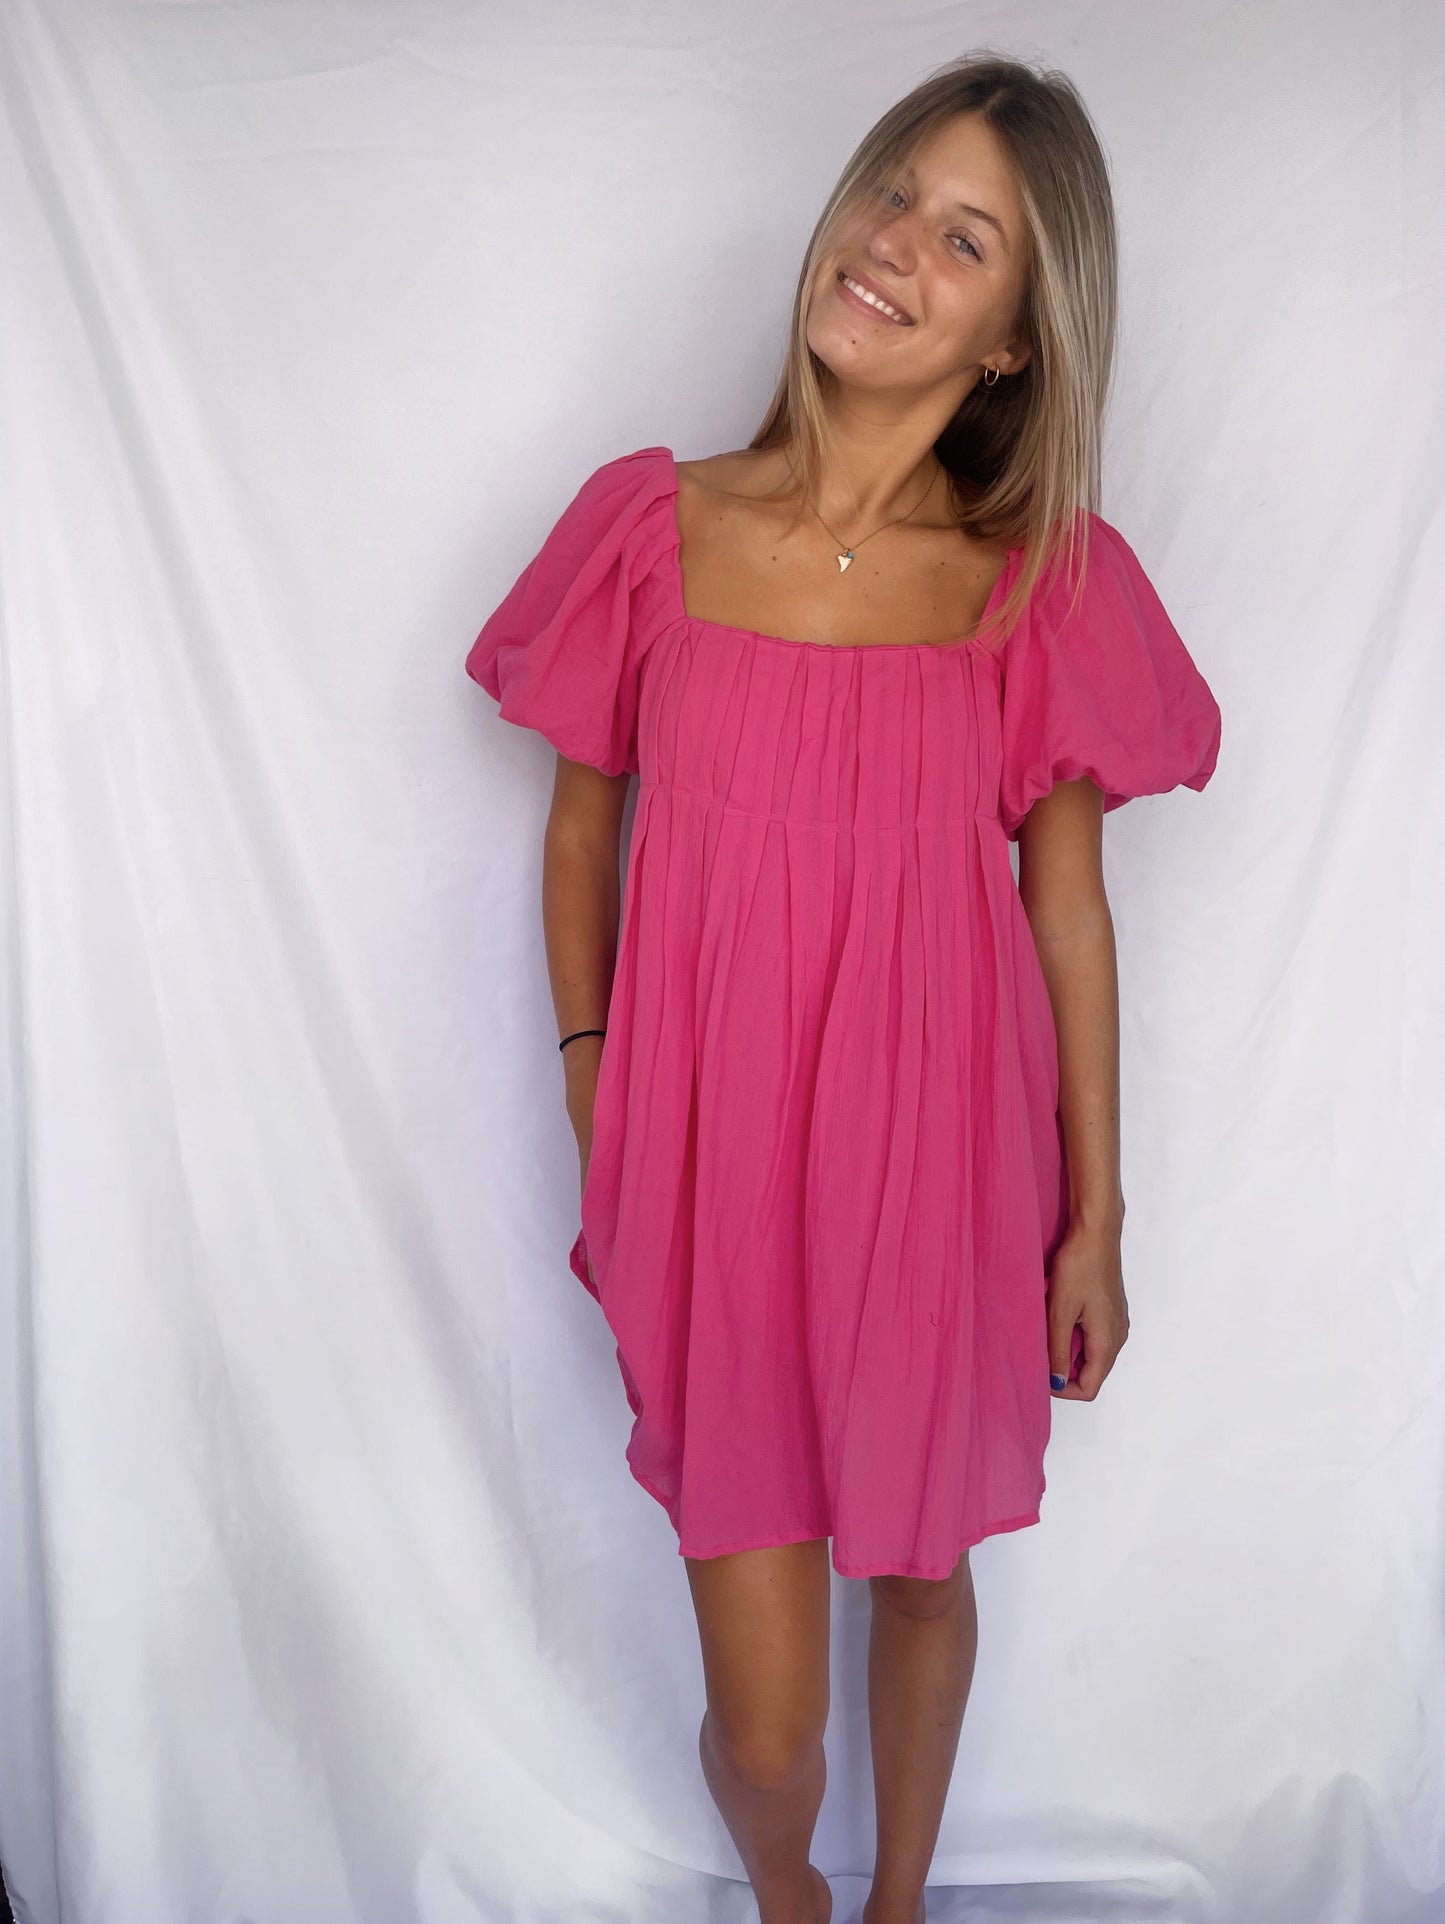 Call It A Crush Pink Dress